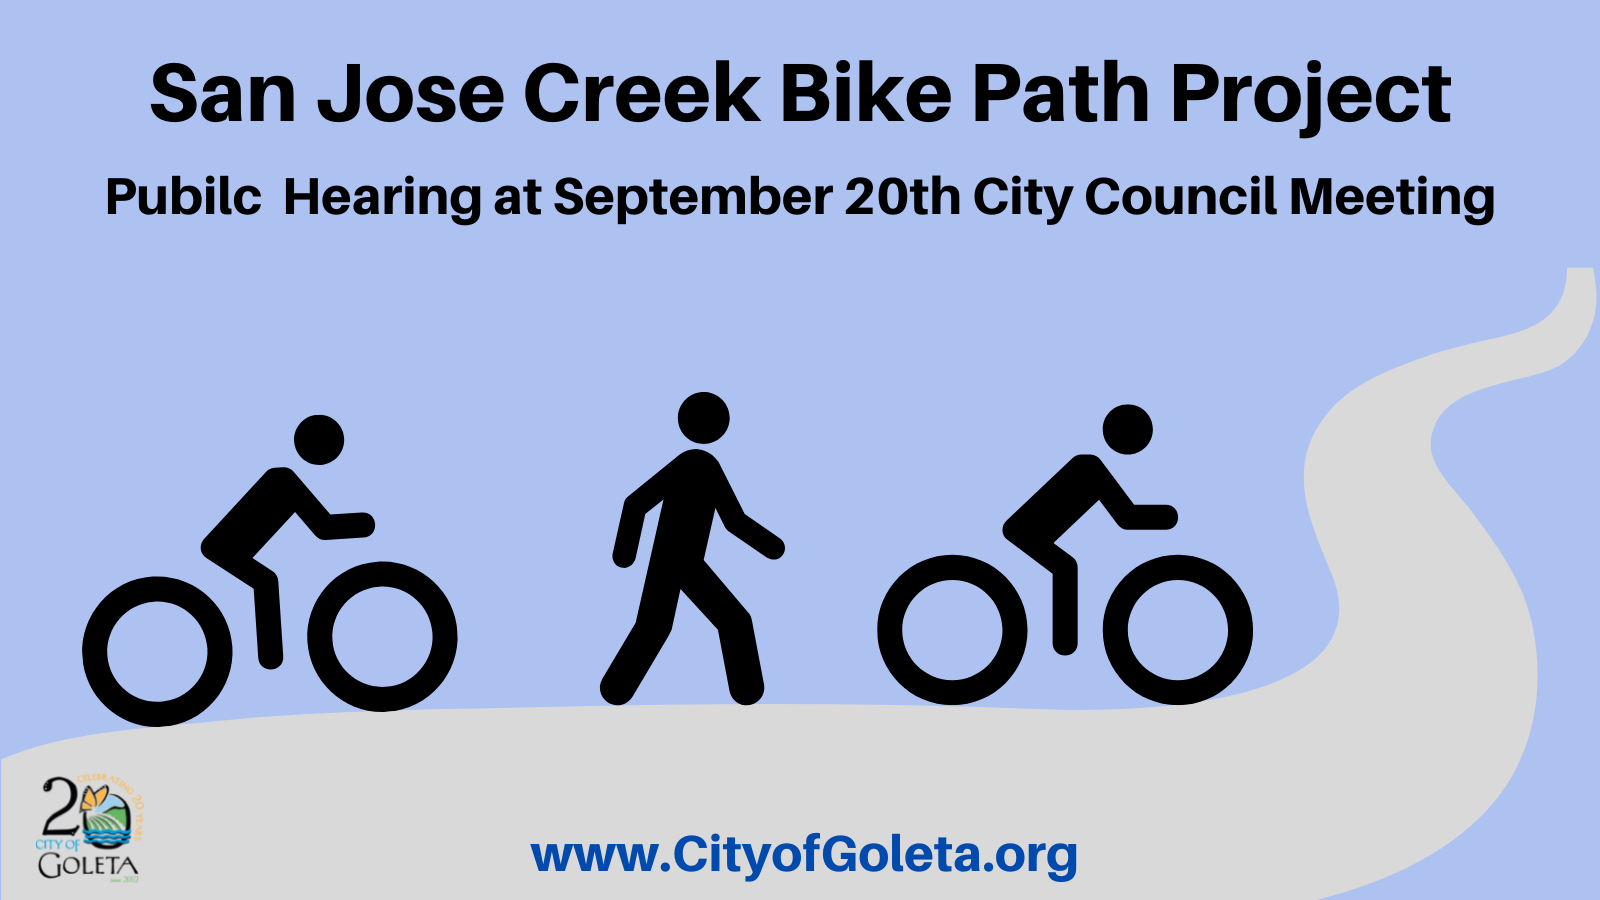 San Jose Creek Bike Path Project Public Hearing on September 20th at 5:30 p.m.